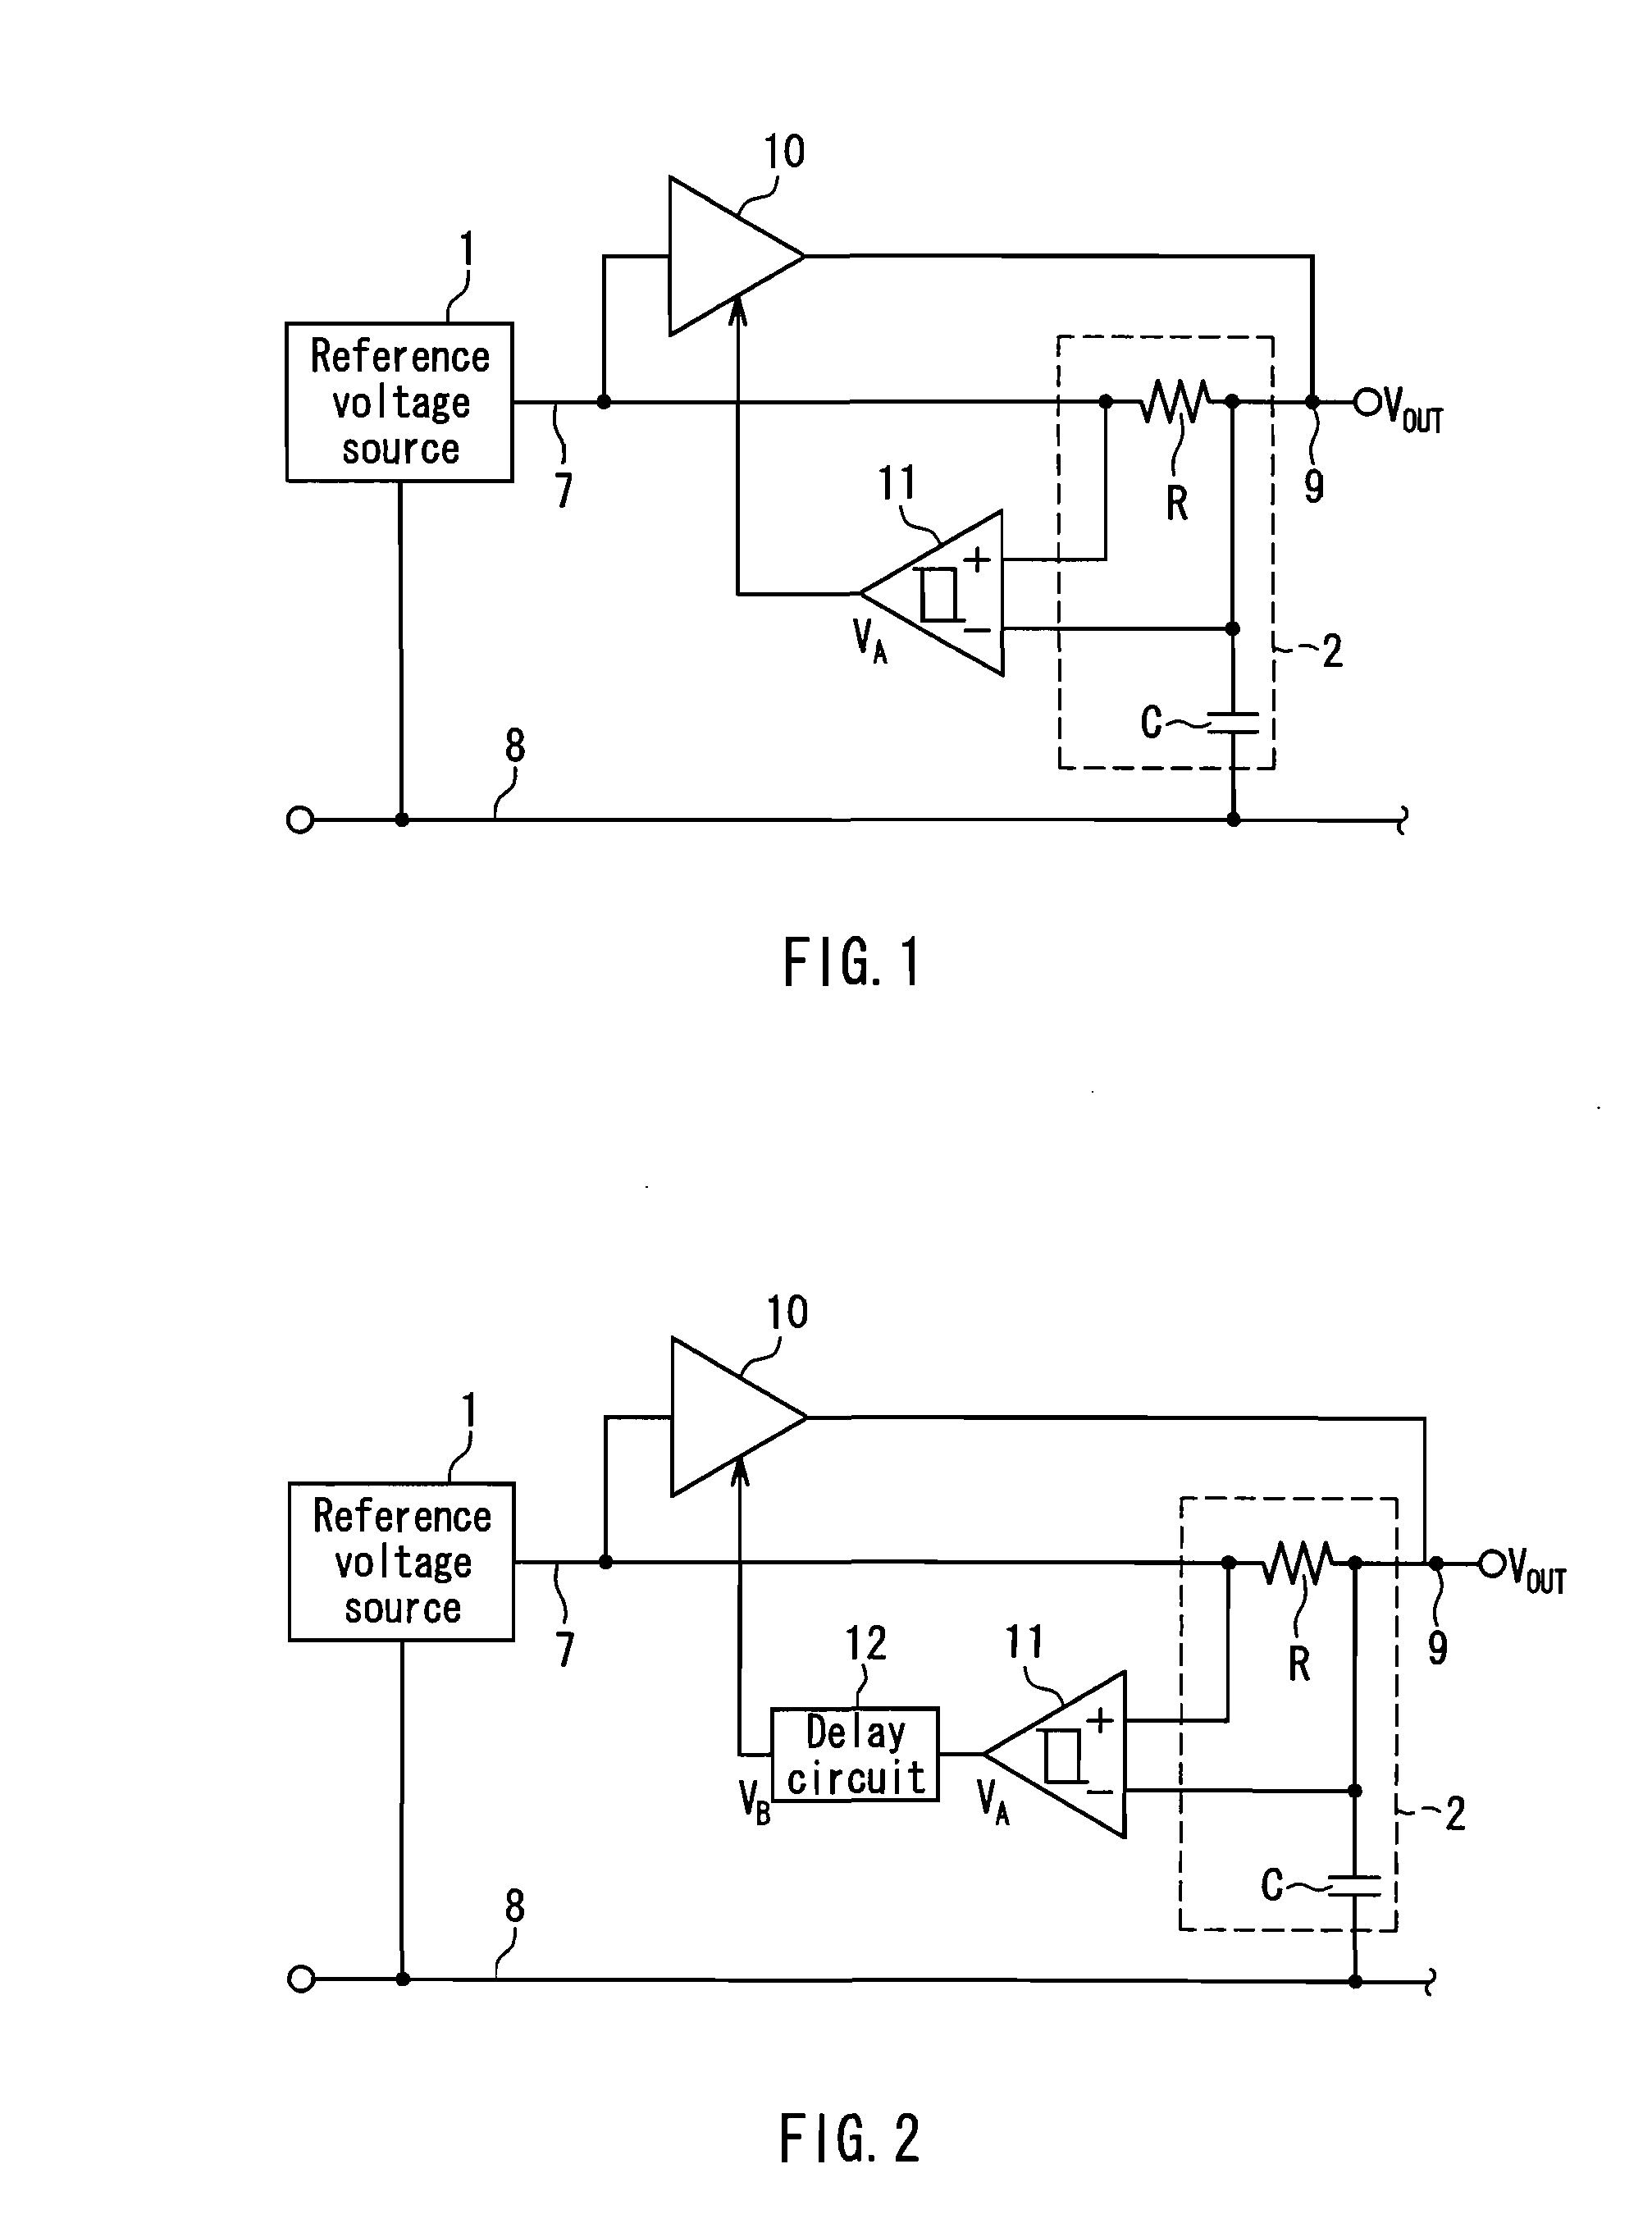 Reference voltage generator